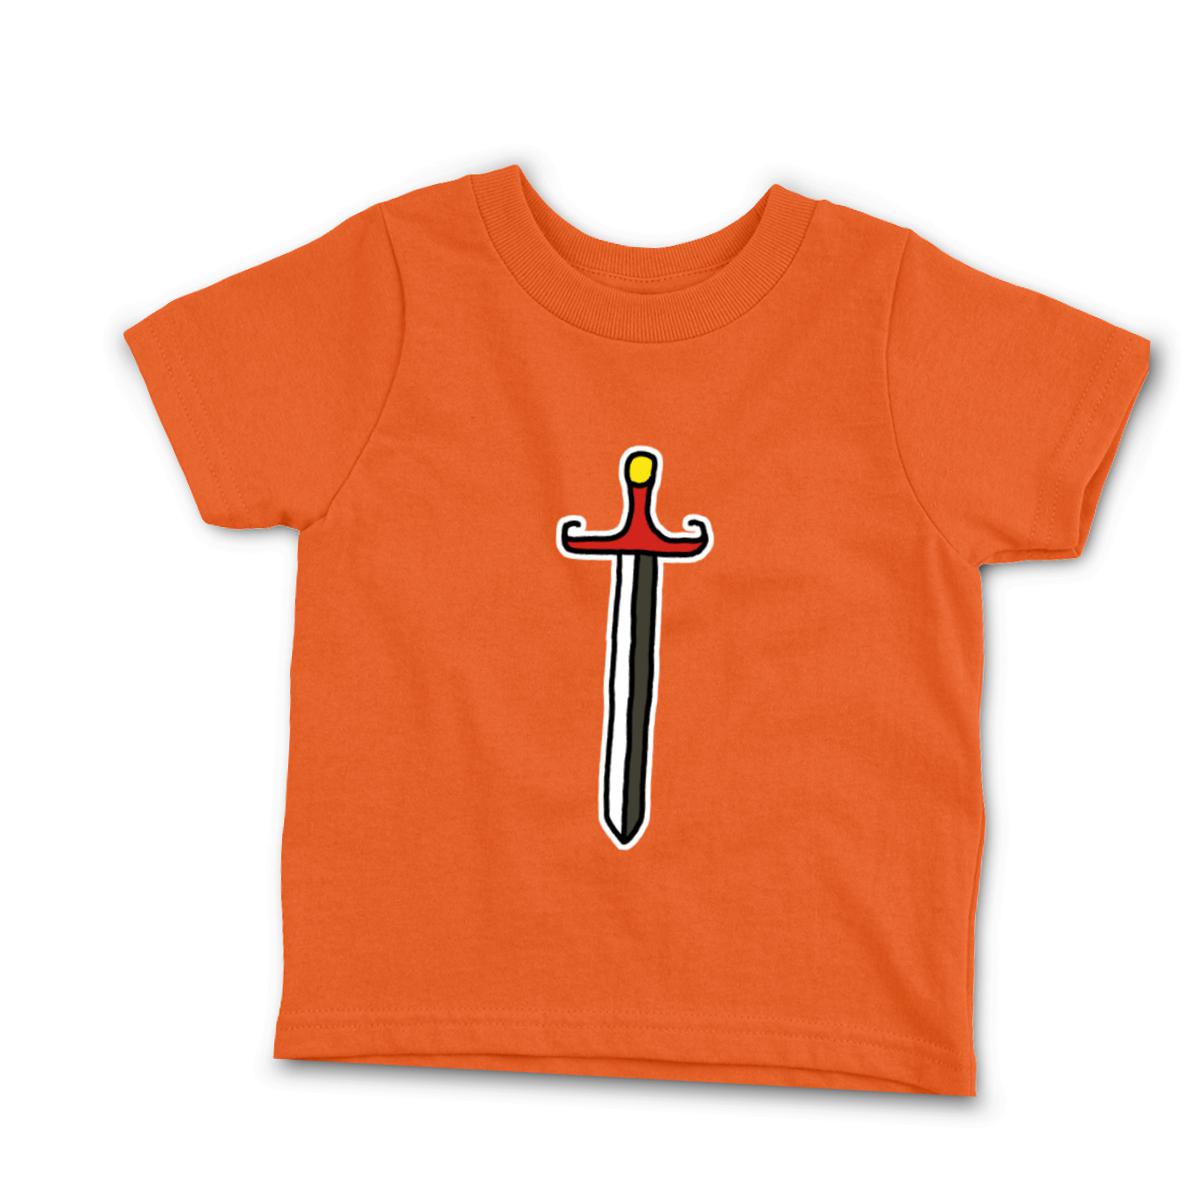 Sword Toddler Tee 4T orange